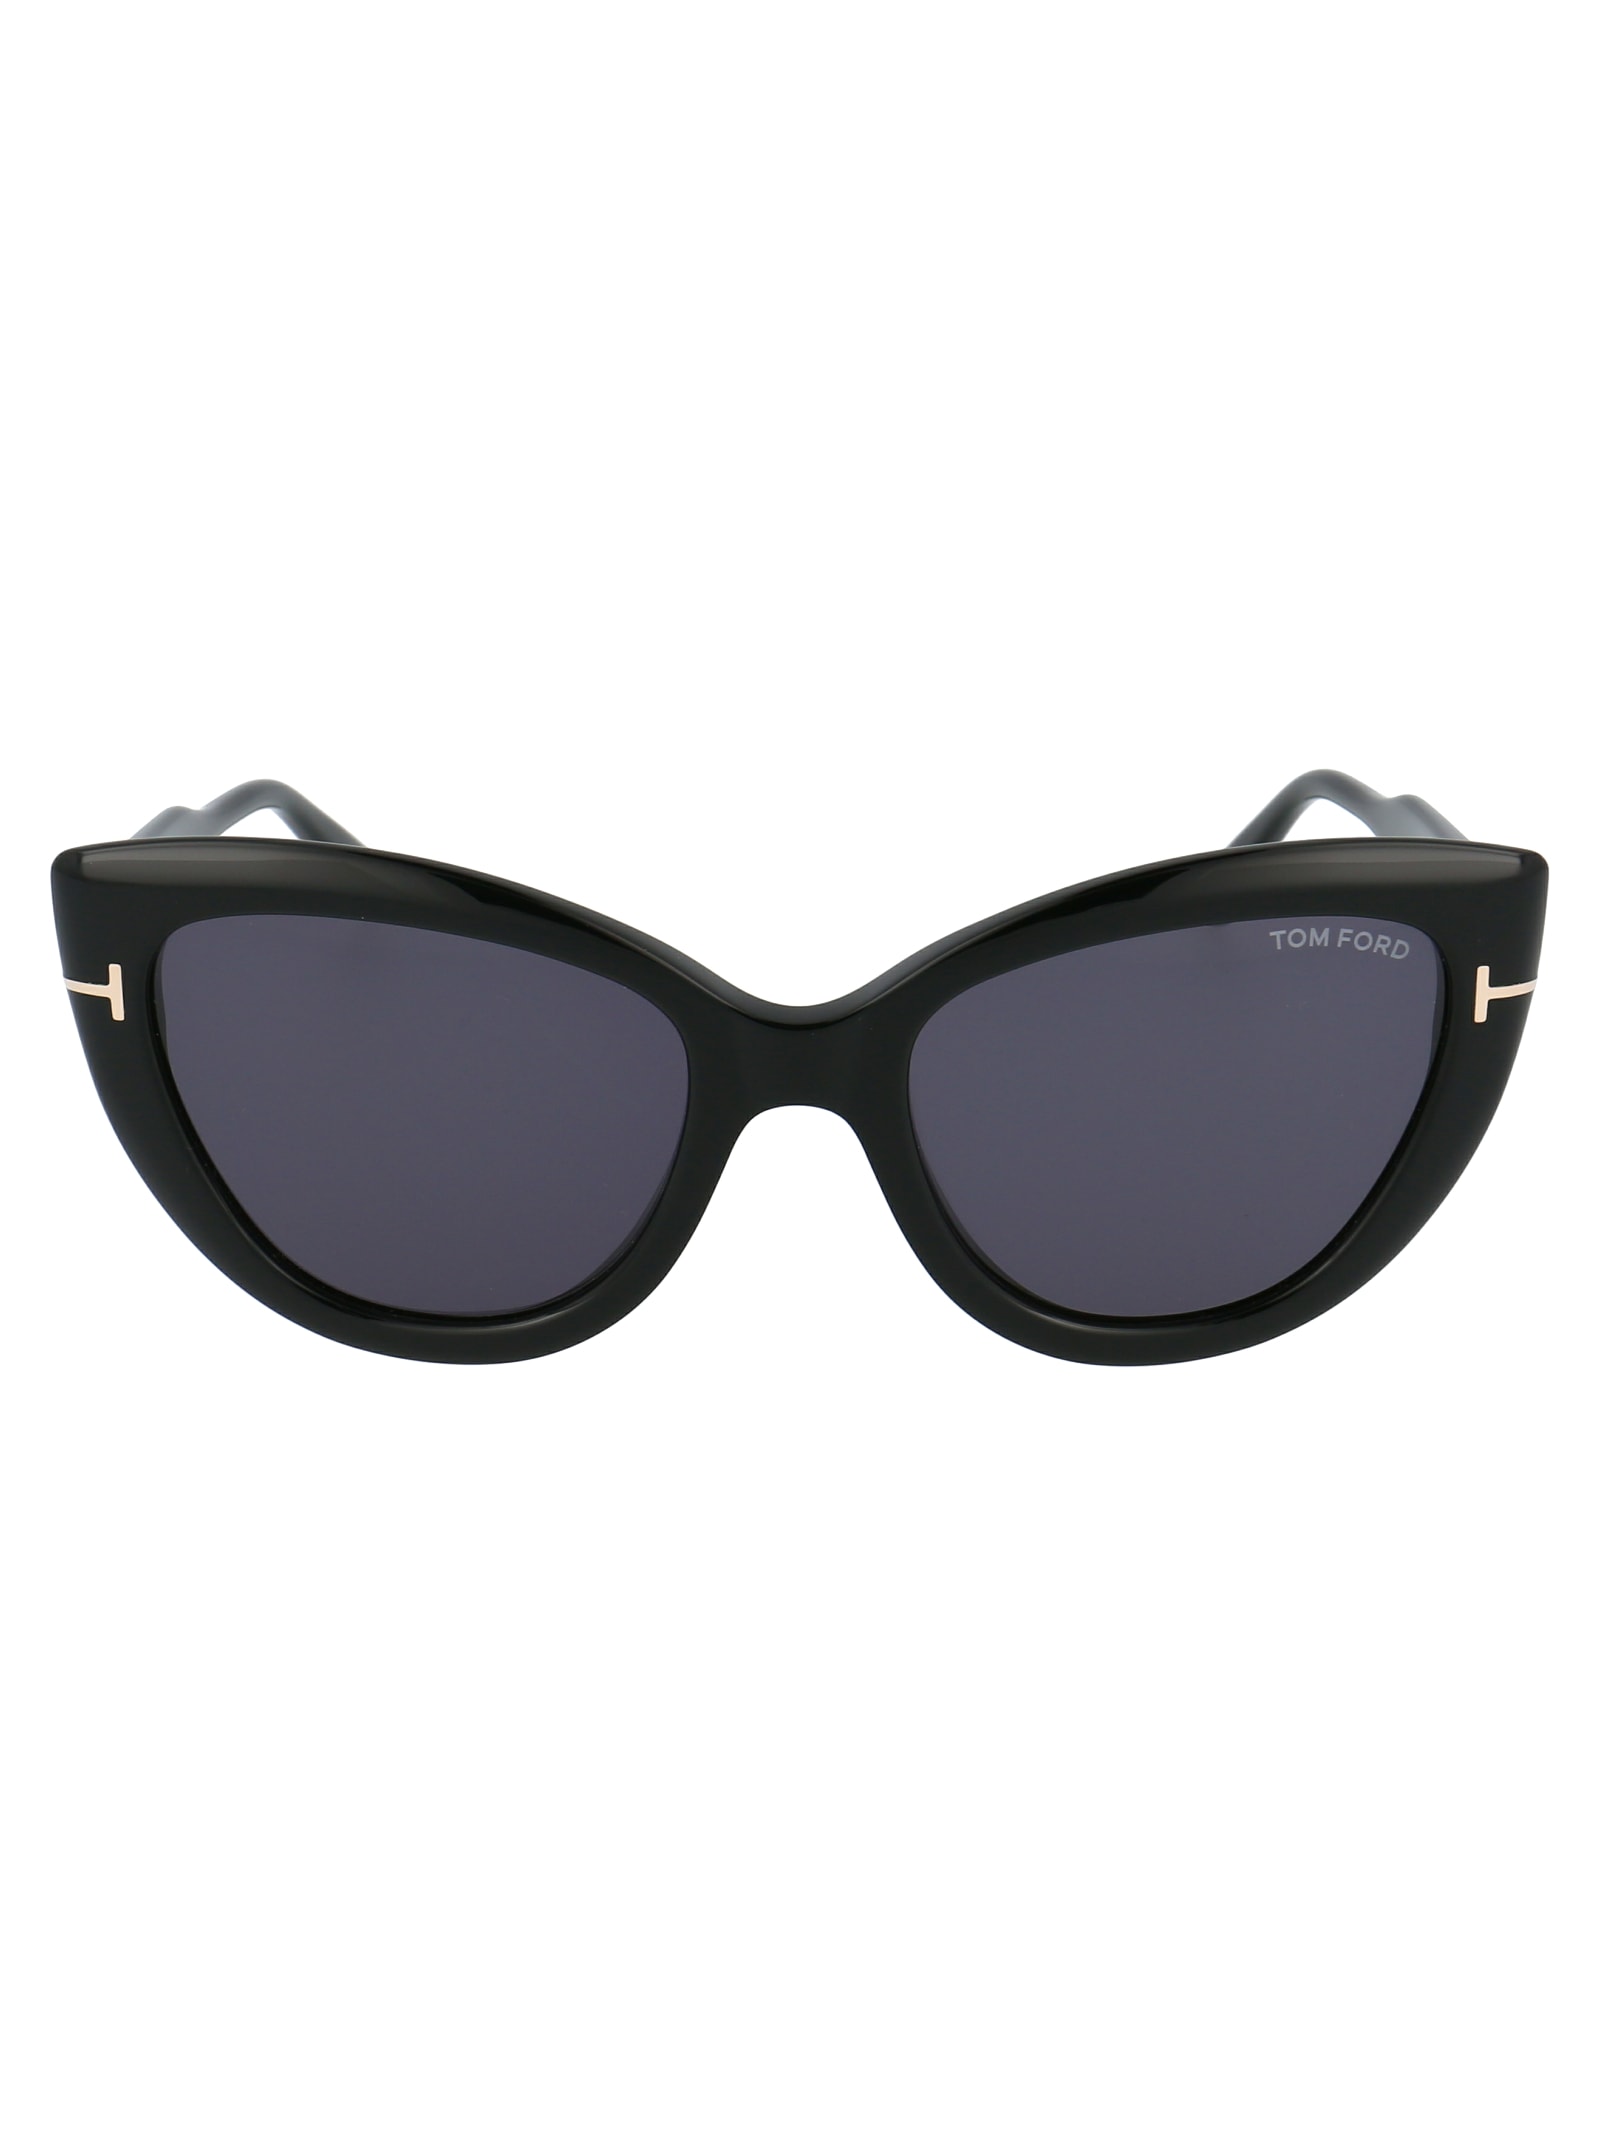 Tom Ford Eyewear Ft0762 Sunglasses